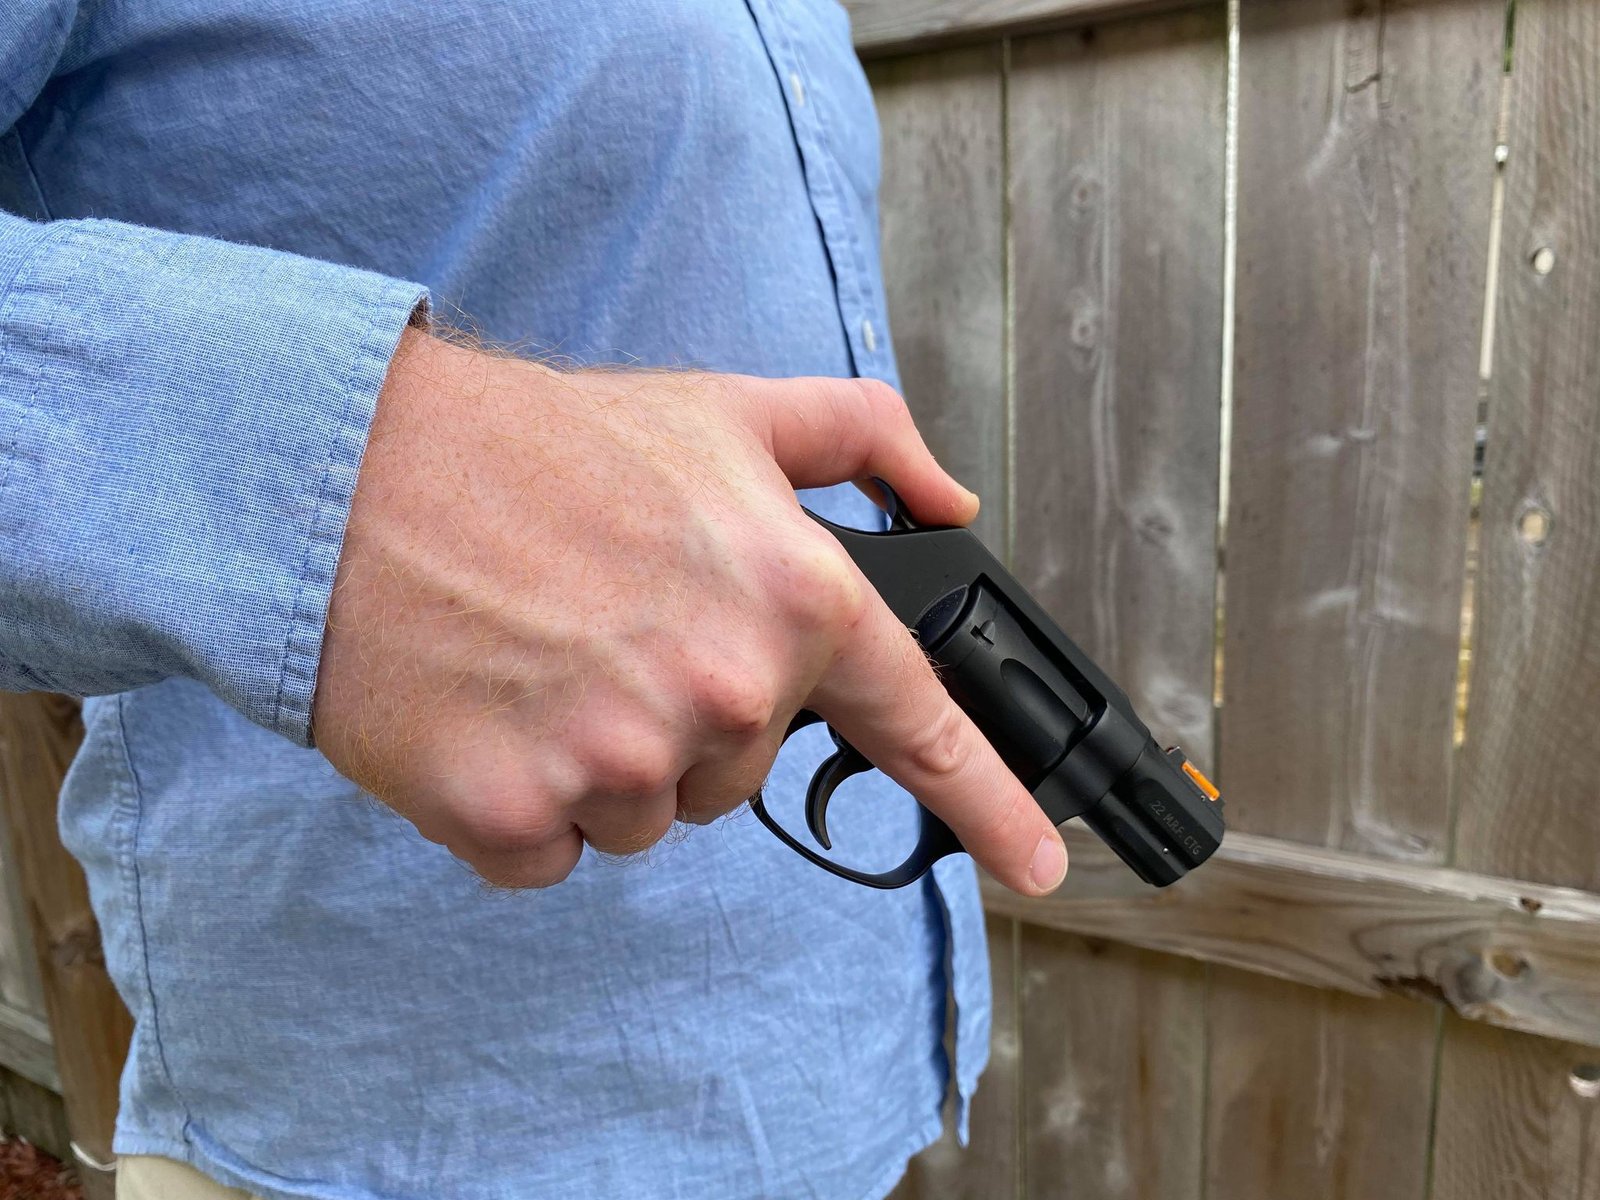 Hammer Spurs Conceal Carry Revolver